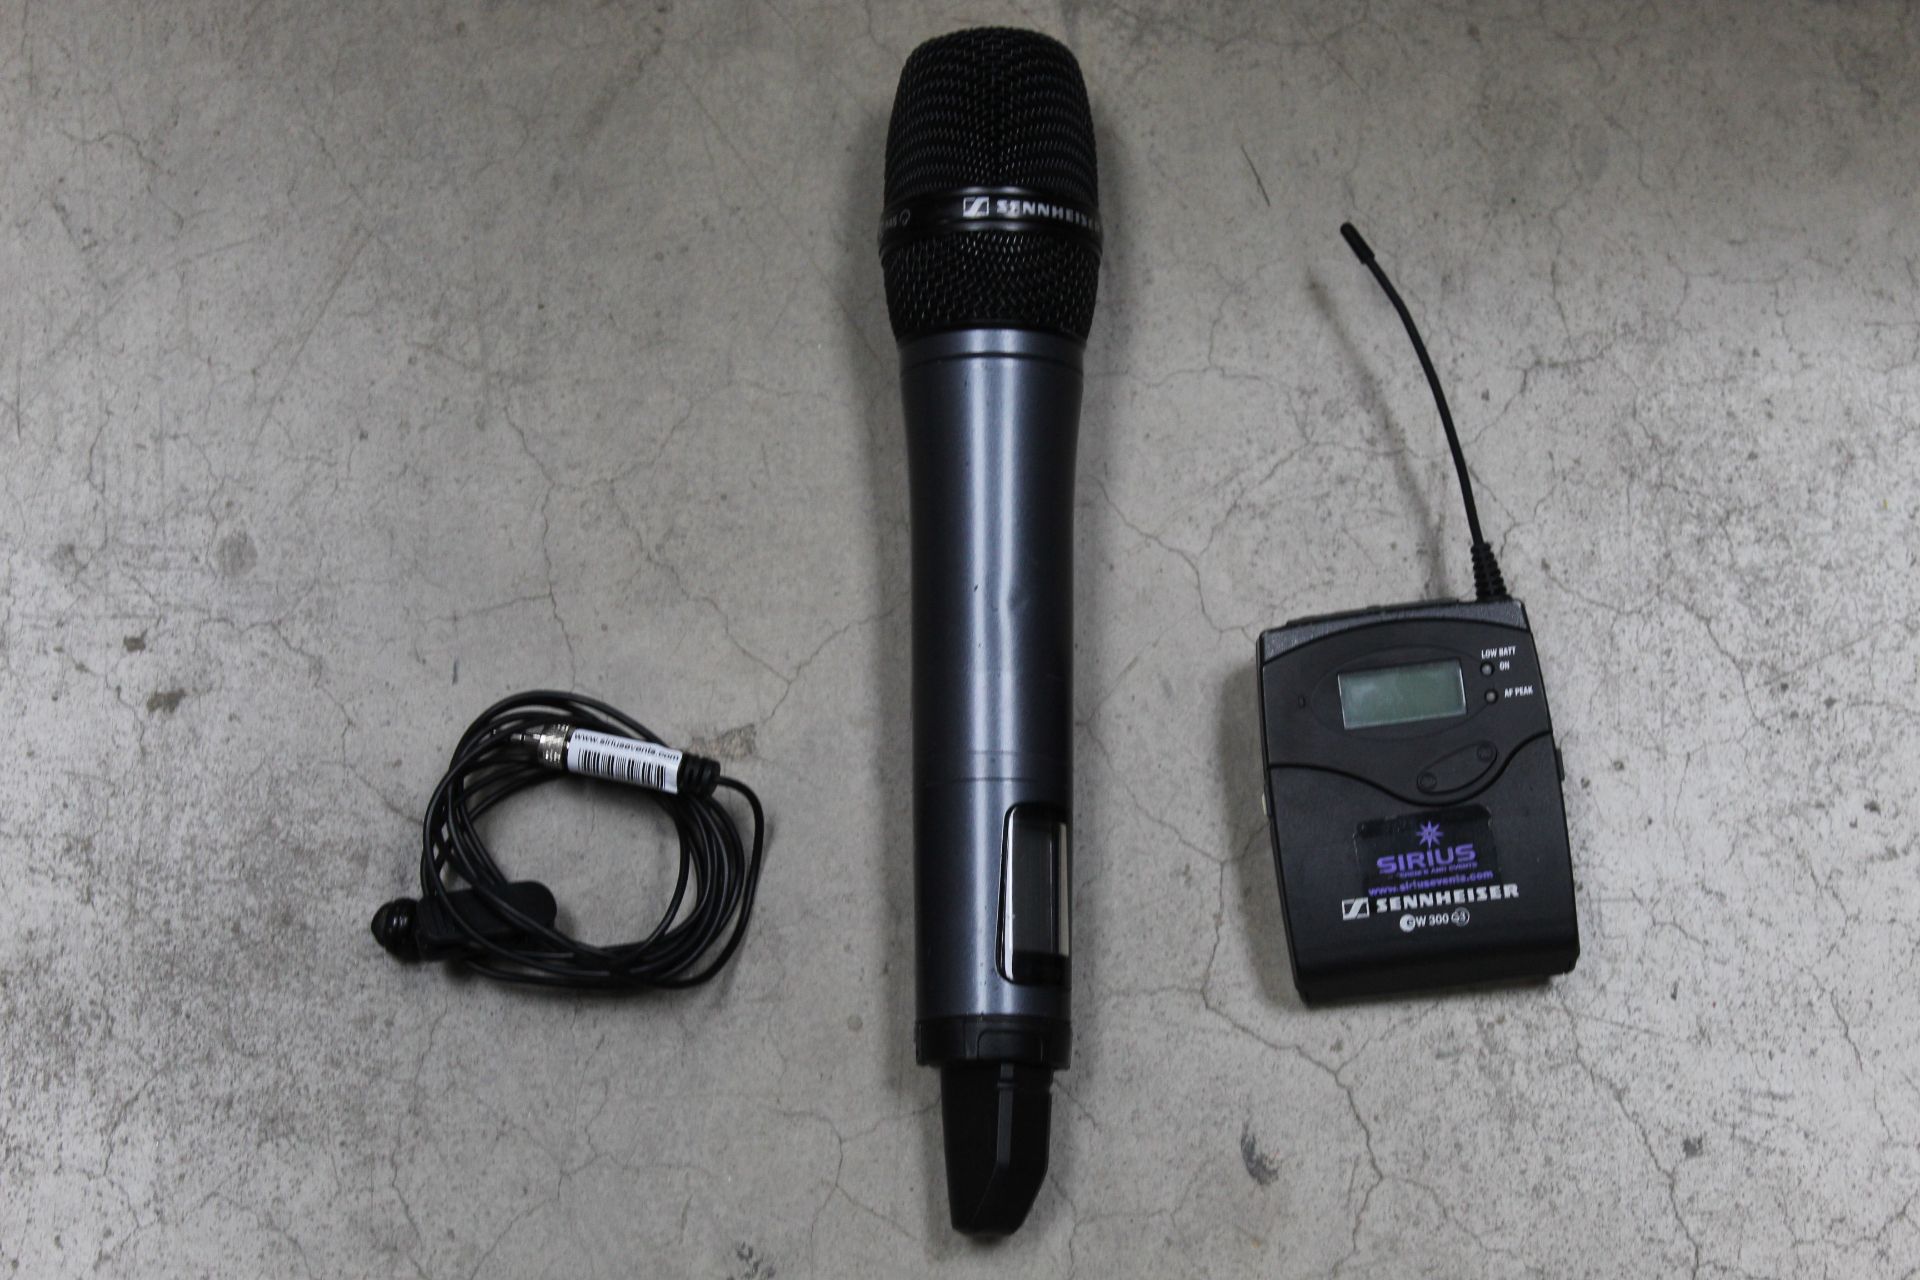 Sennheiser G3 4 way radio microphone kit (Channel 38) comprising: 1x Sennheiser ASA1 antenna - Image 6 of 9